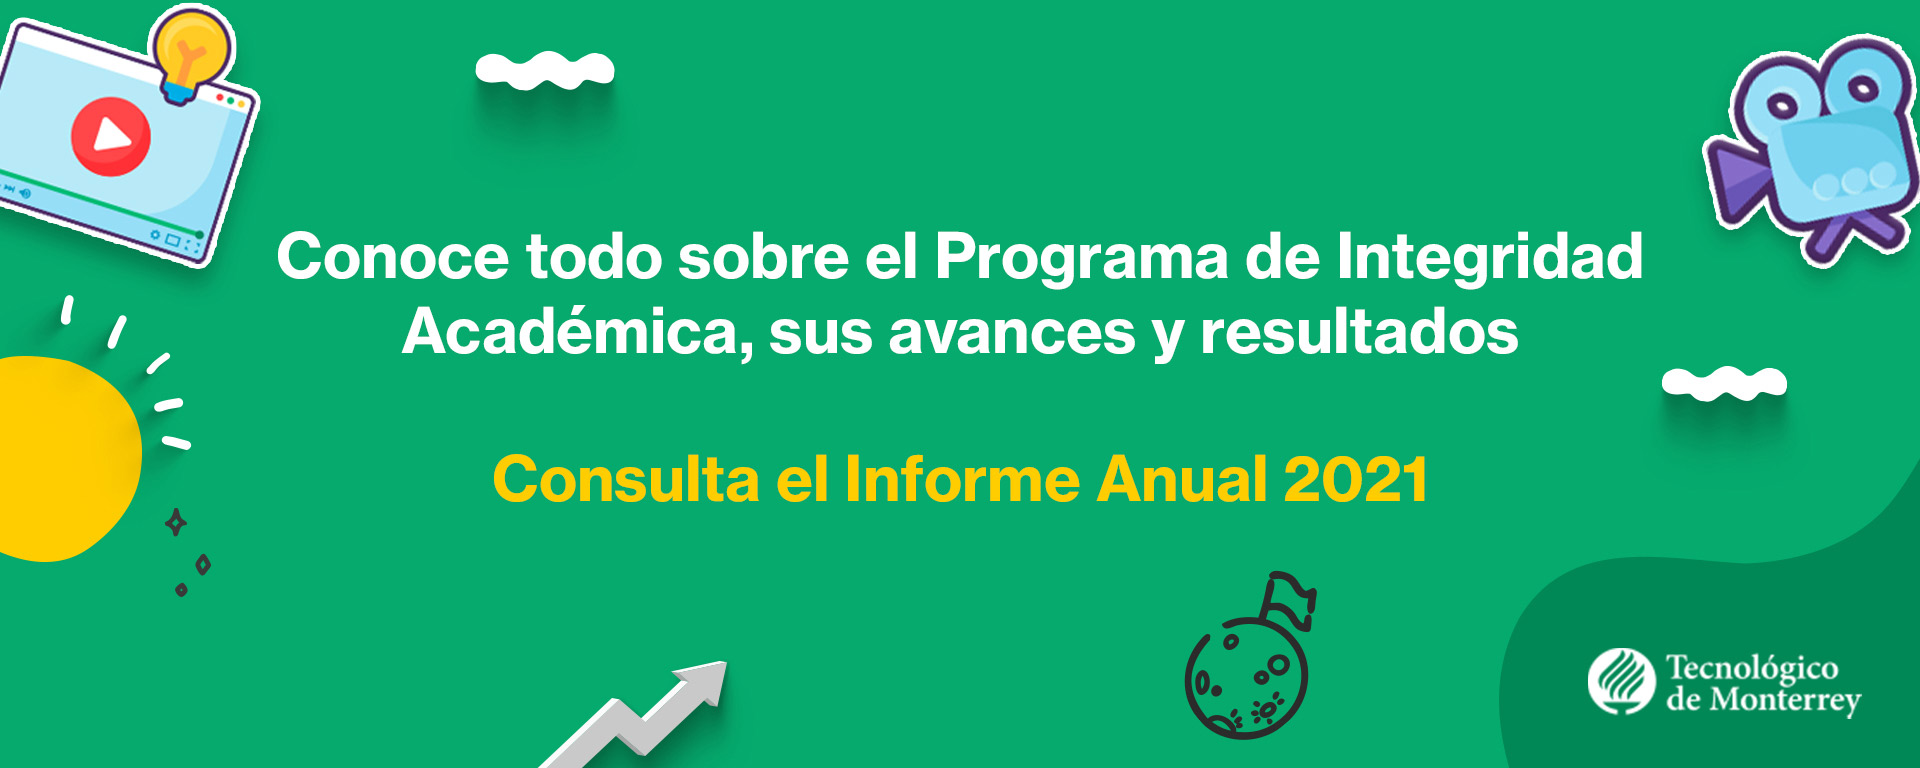 Informe anual de Integridad Académica del Tec de Monterrey